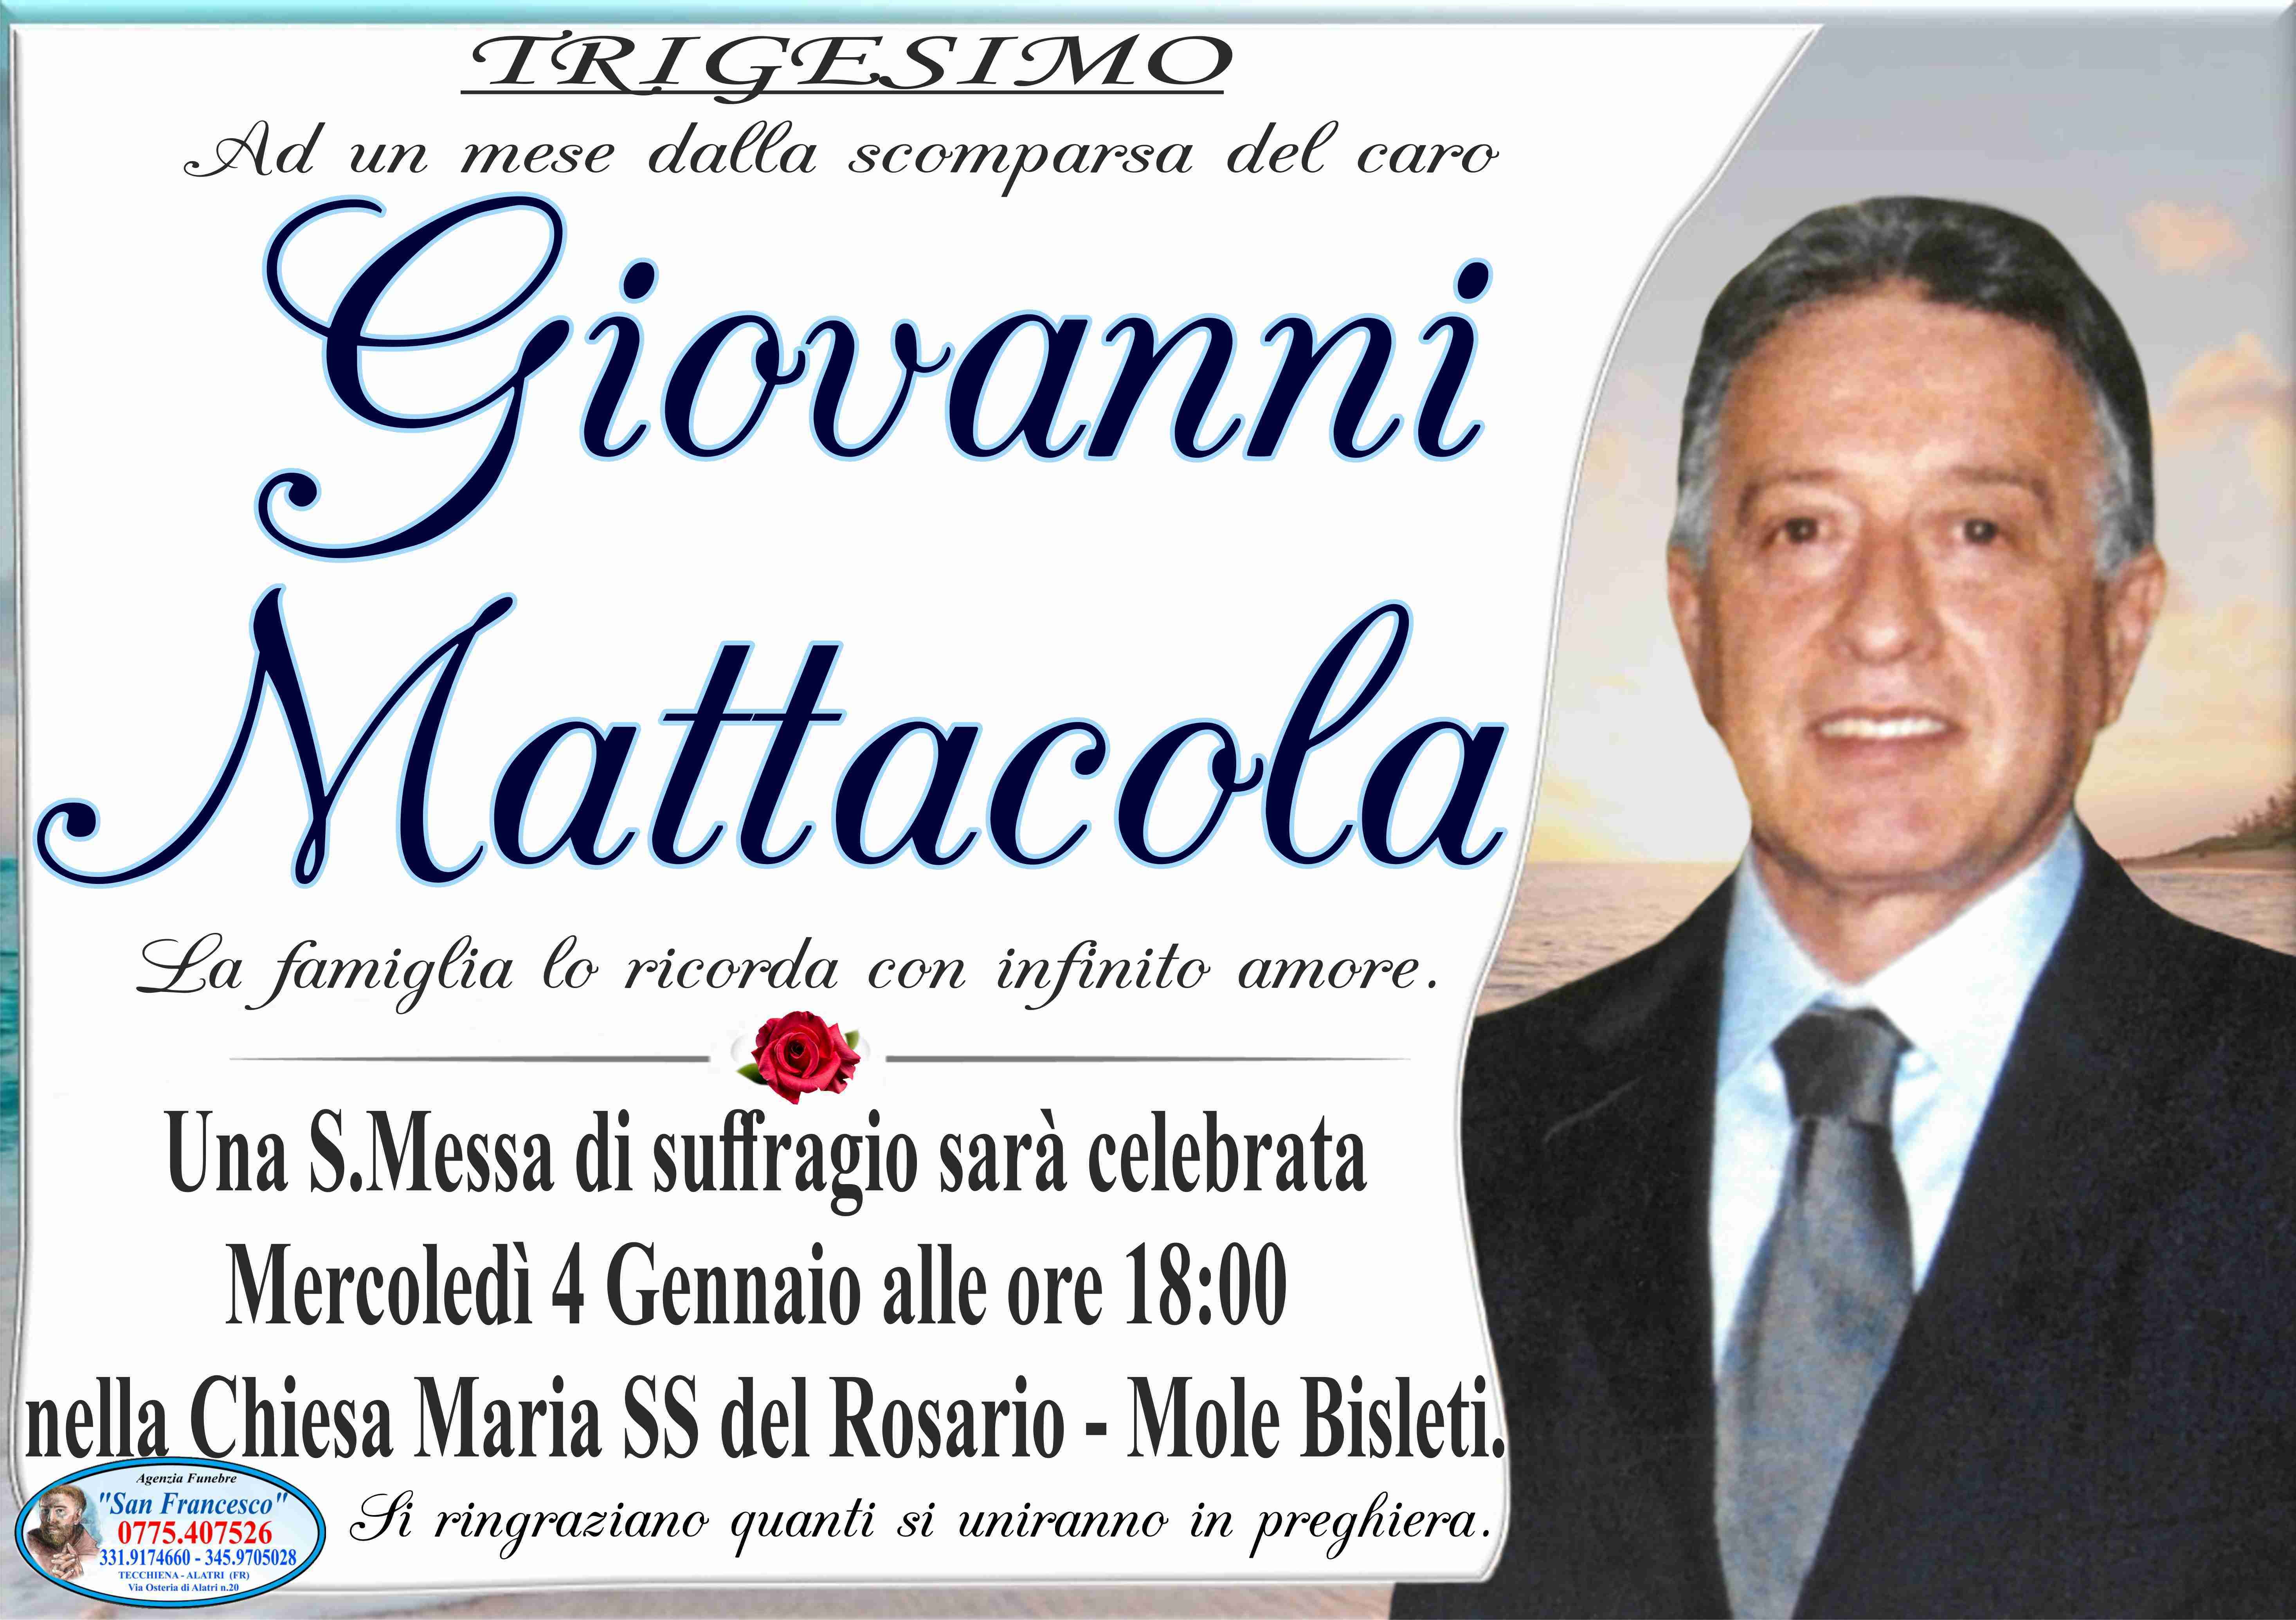 Giovanni Mattacola